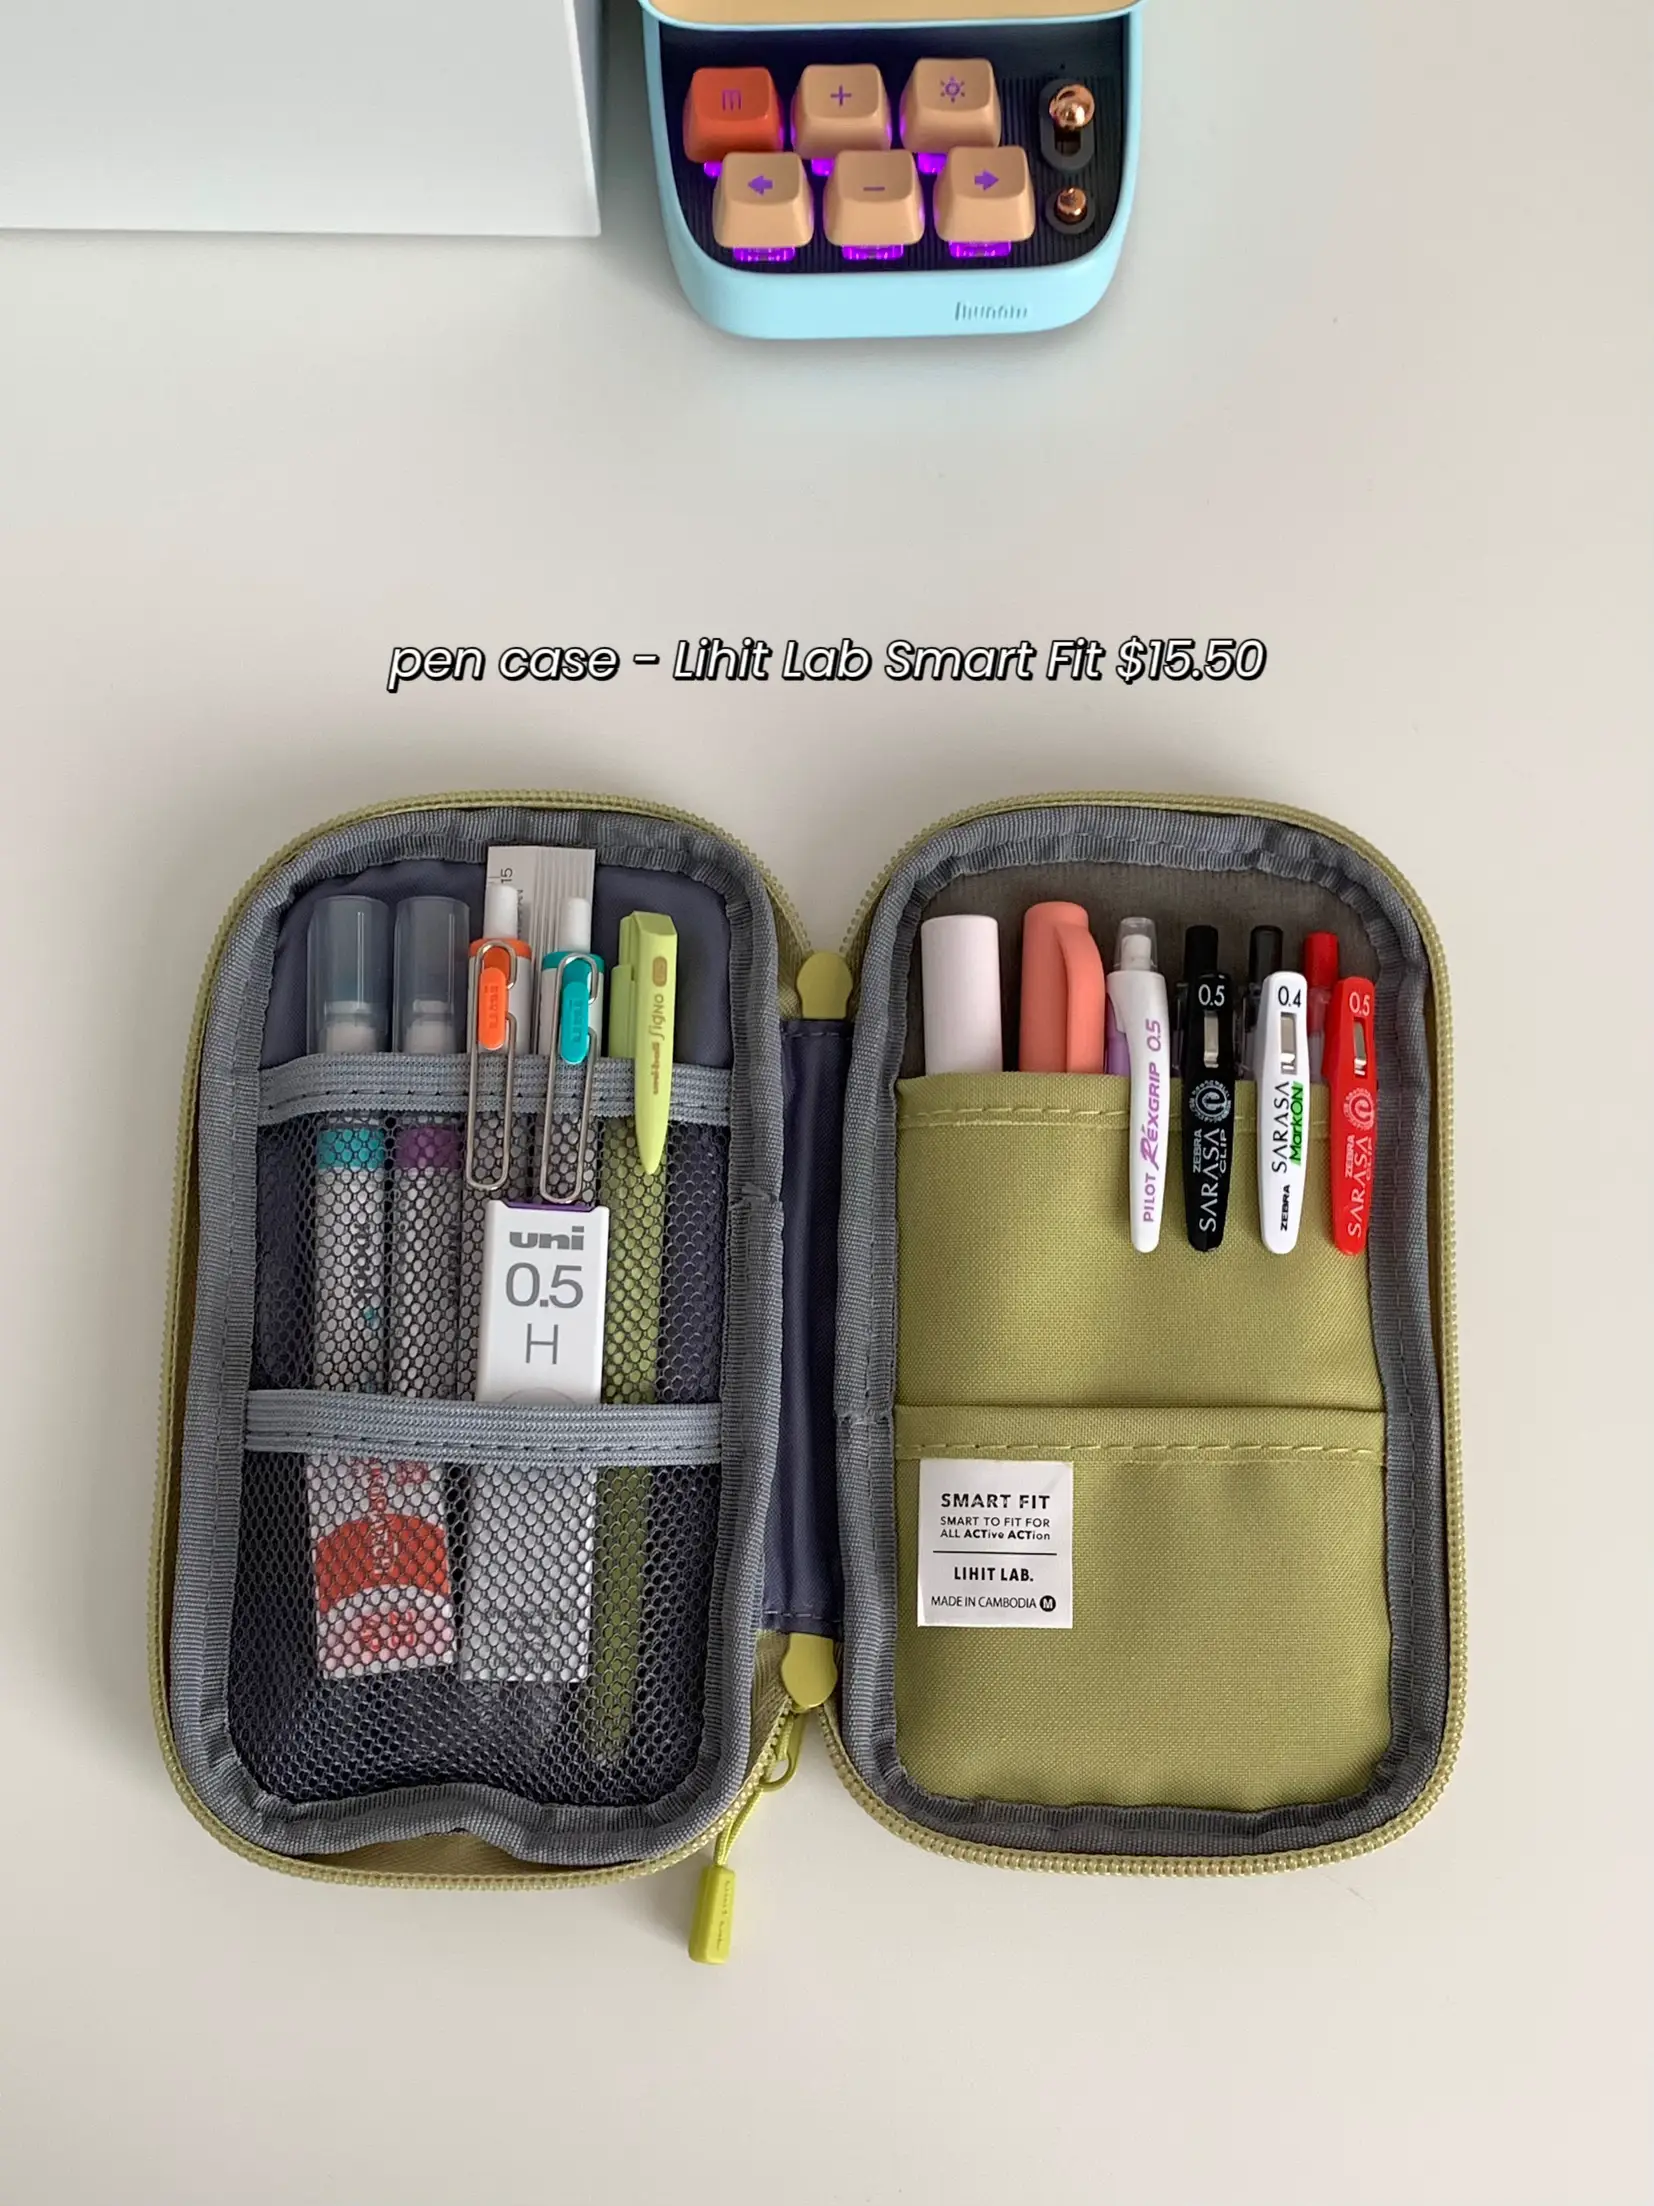 Lihit Lab Compact Pen Case